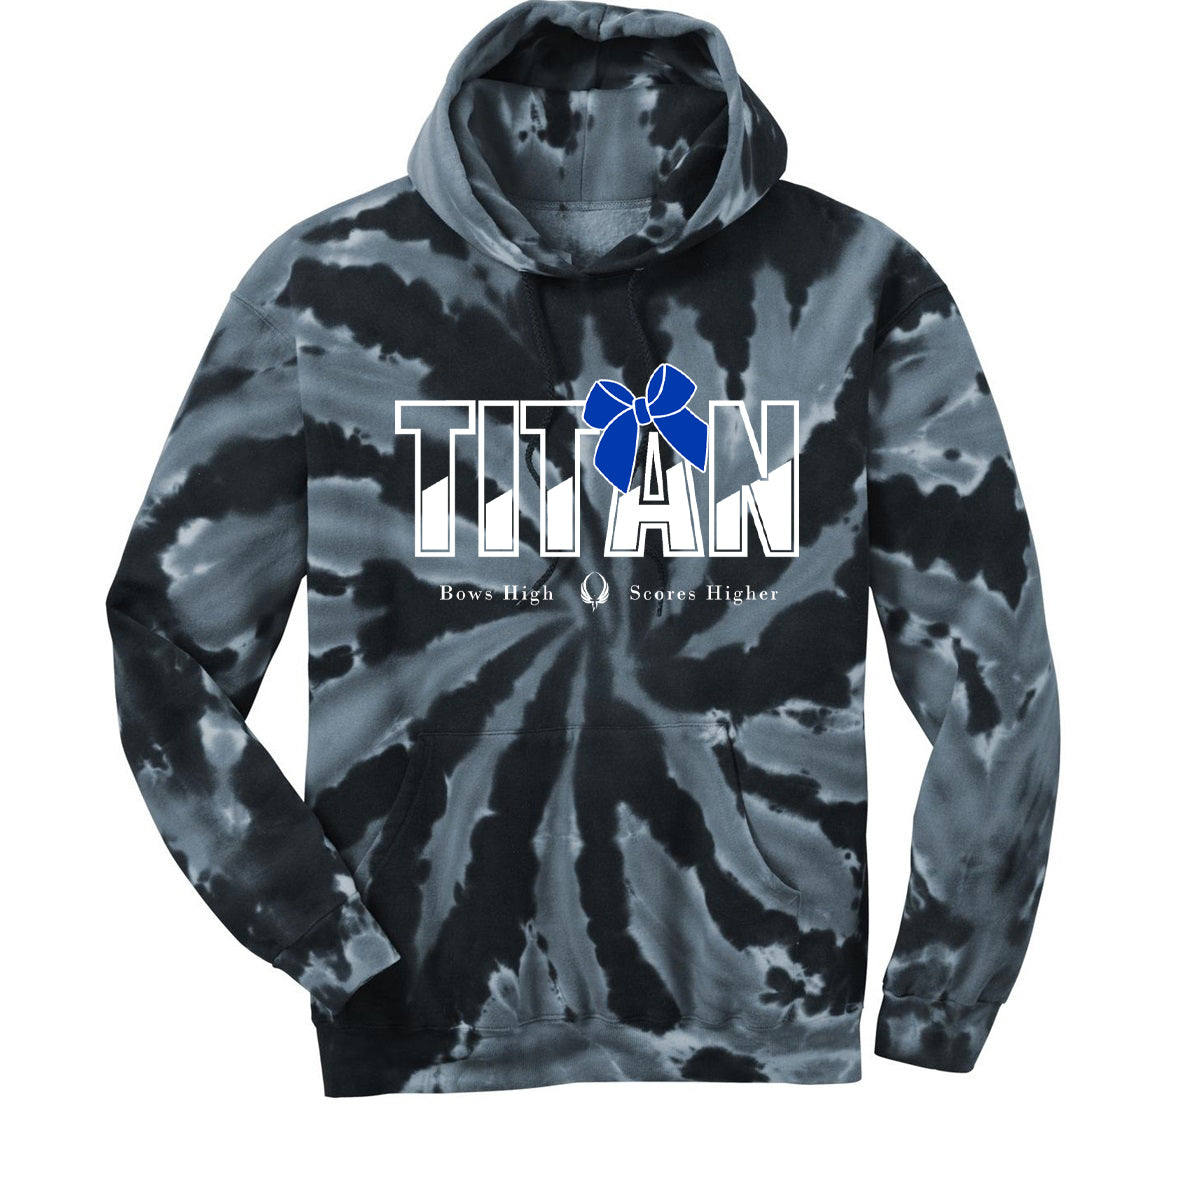 Titan Tie-Dye Hooded Sweatshirt Bows High